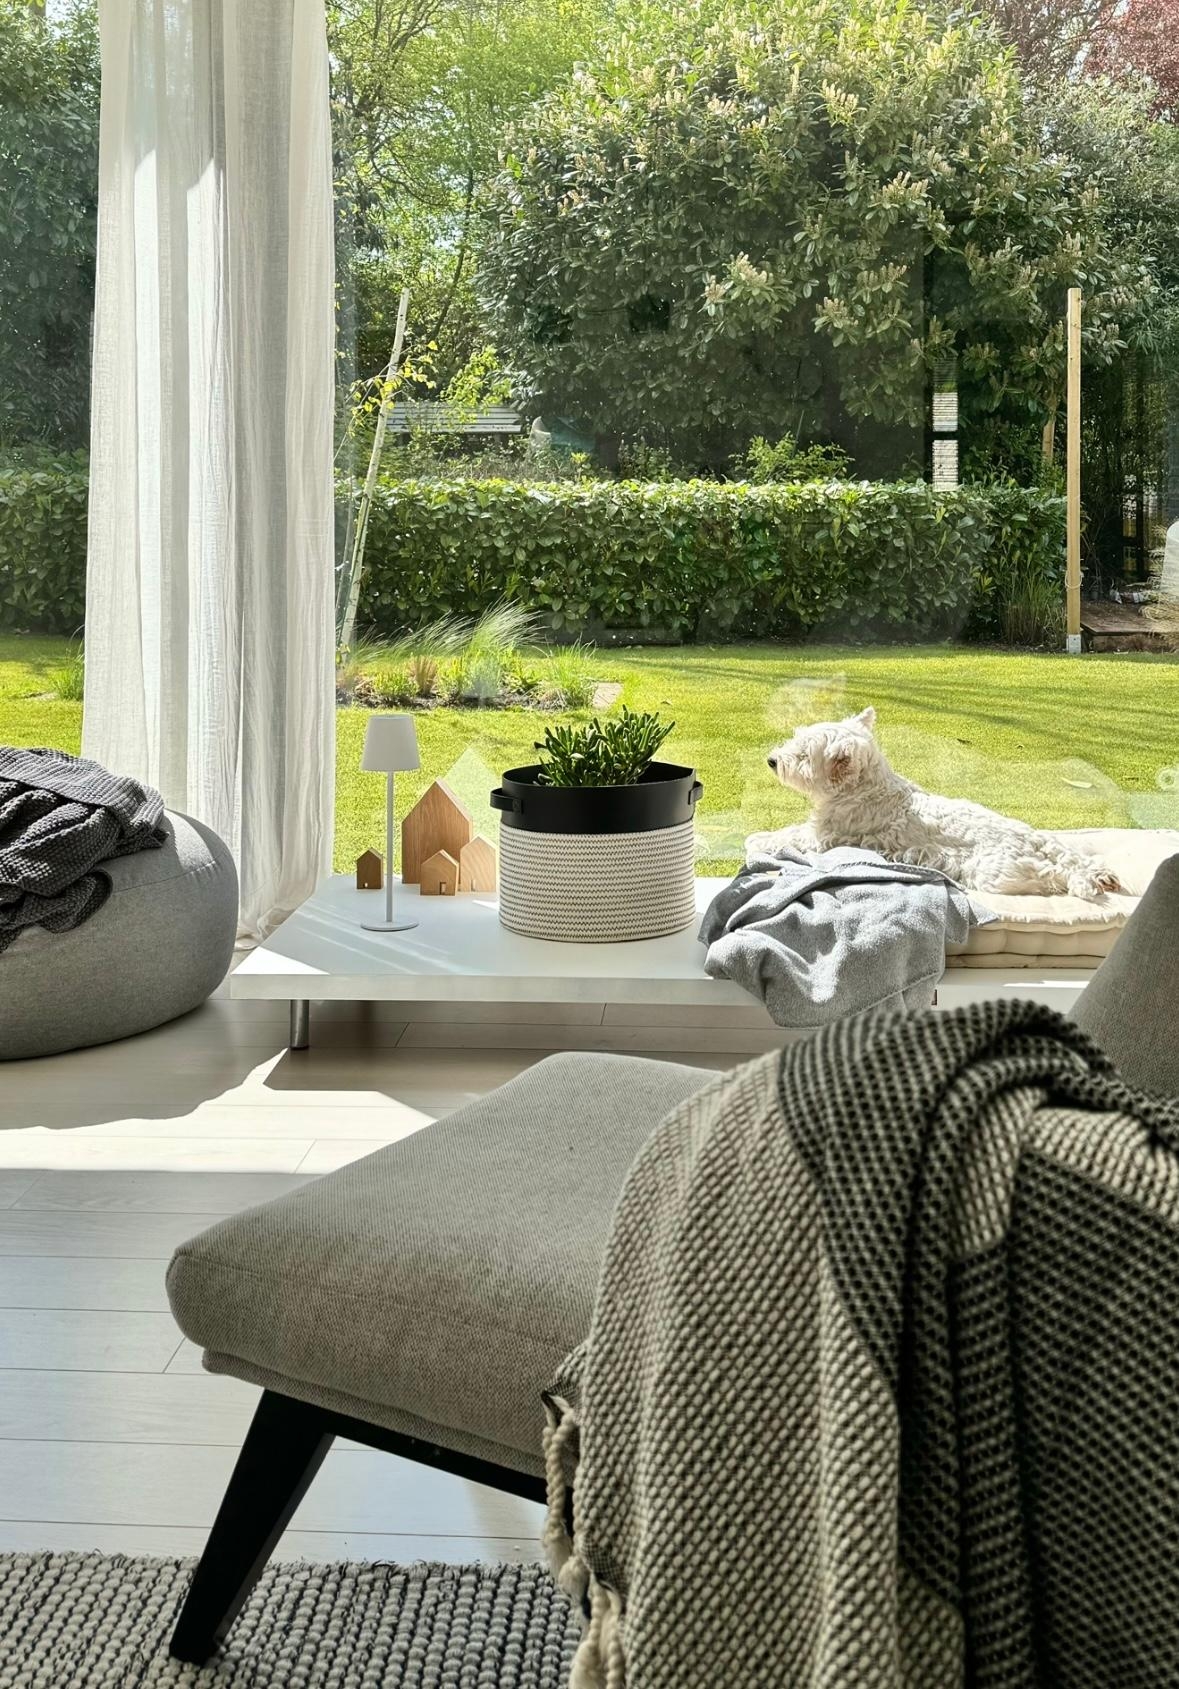 Sonnenbad 🐶✌🏻#sogehtsgeradenoch #couchstyle